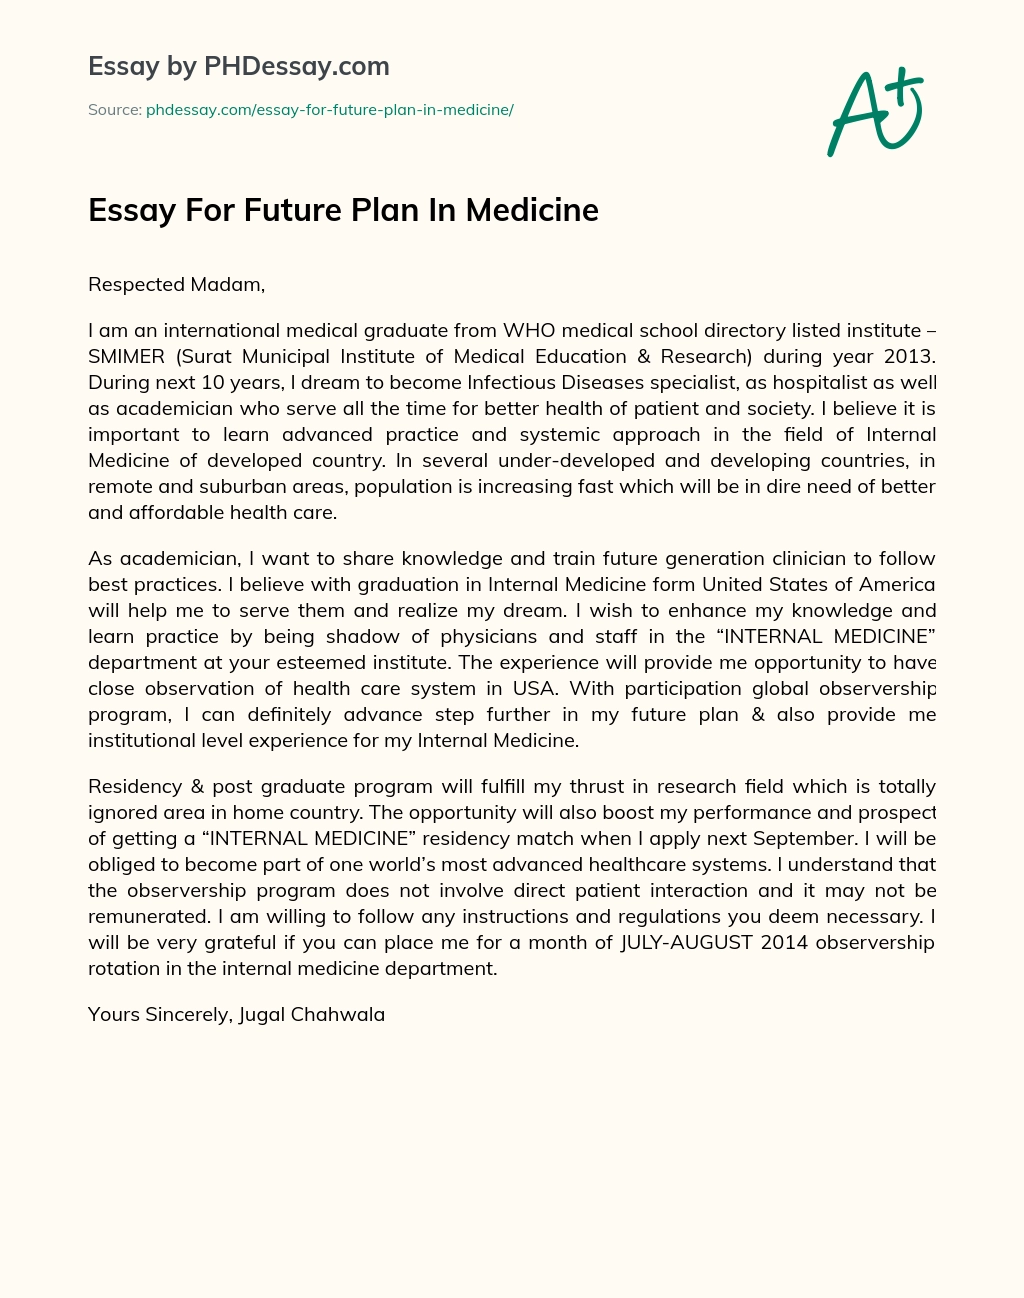 Essay For Future Plan In Medicine essay